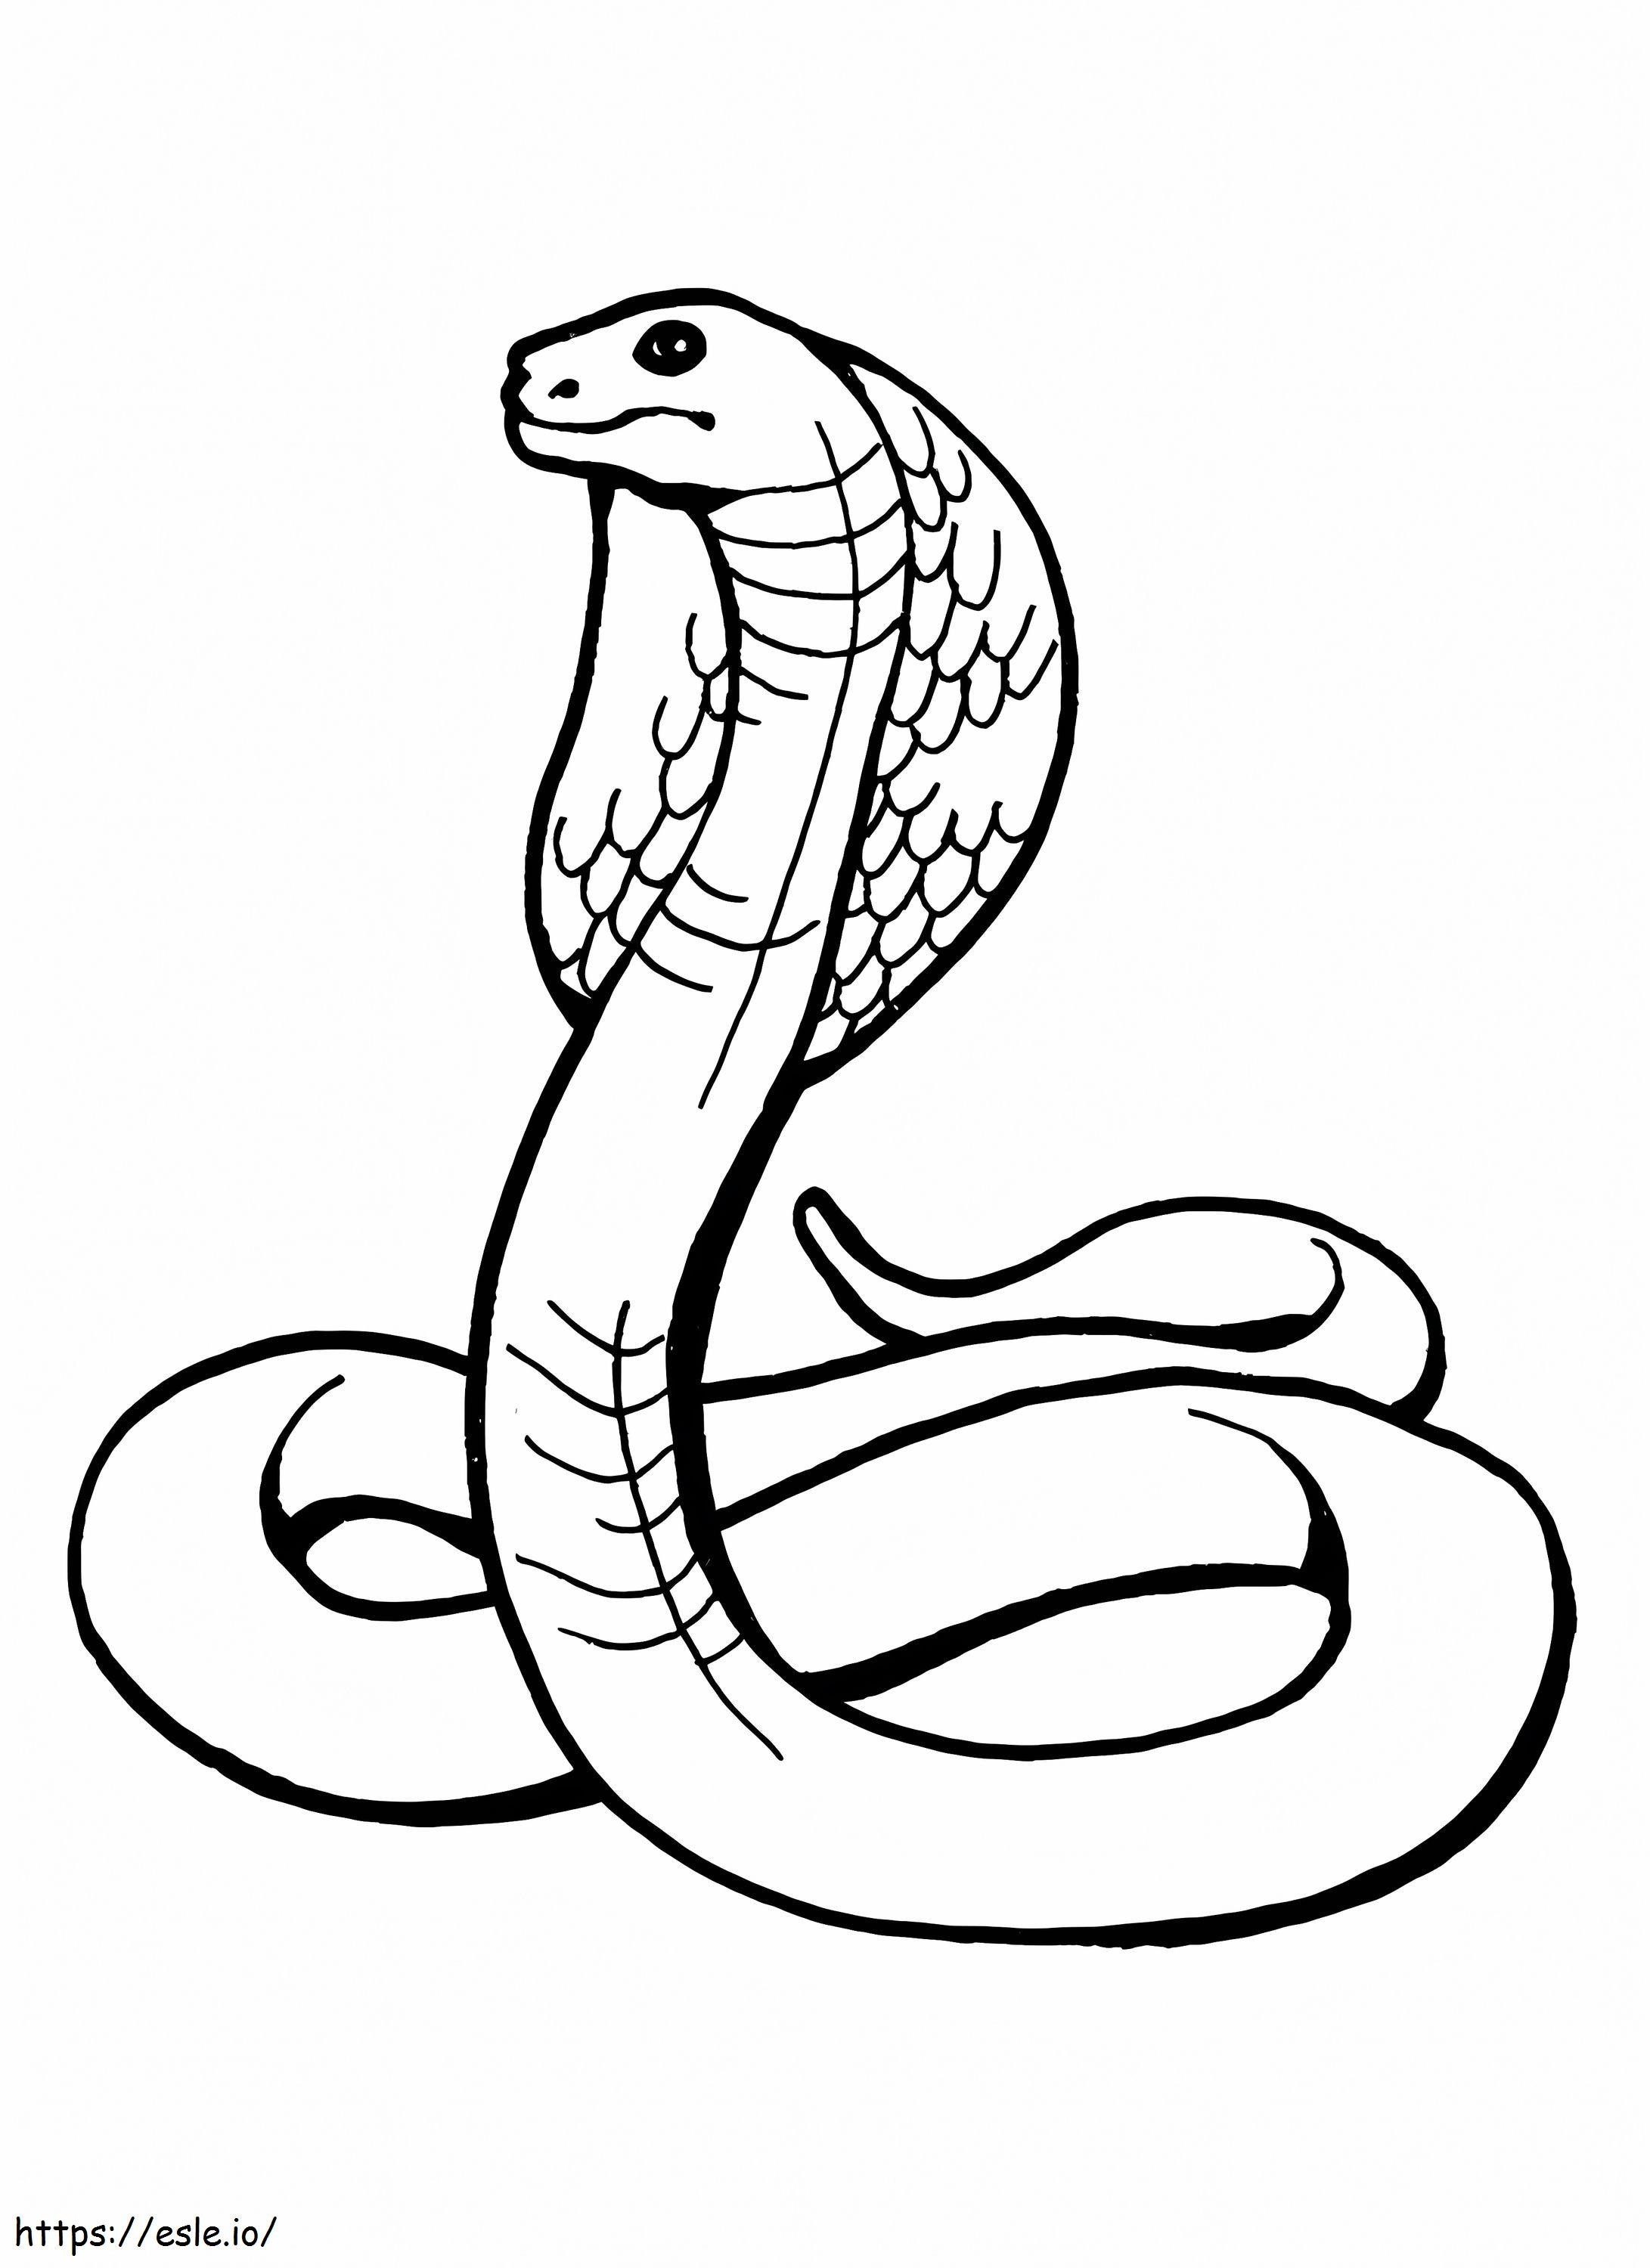 Coloriage Cobra cool à imprimer dessin